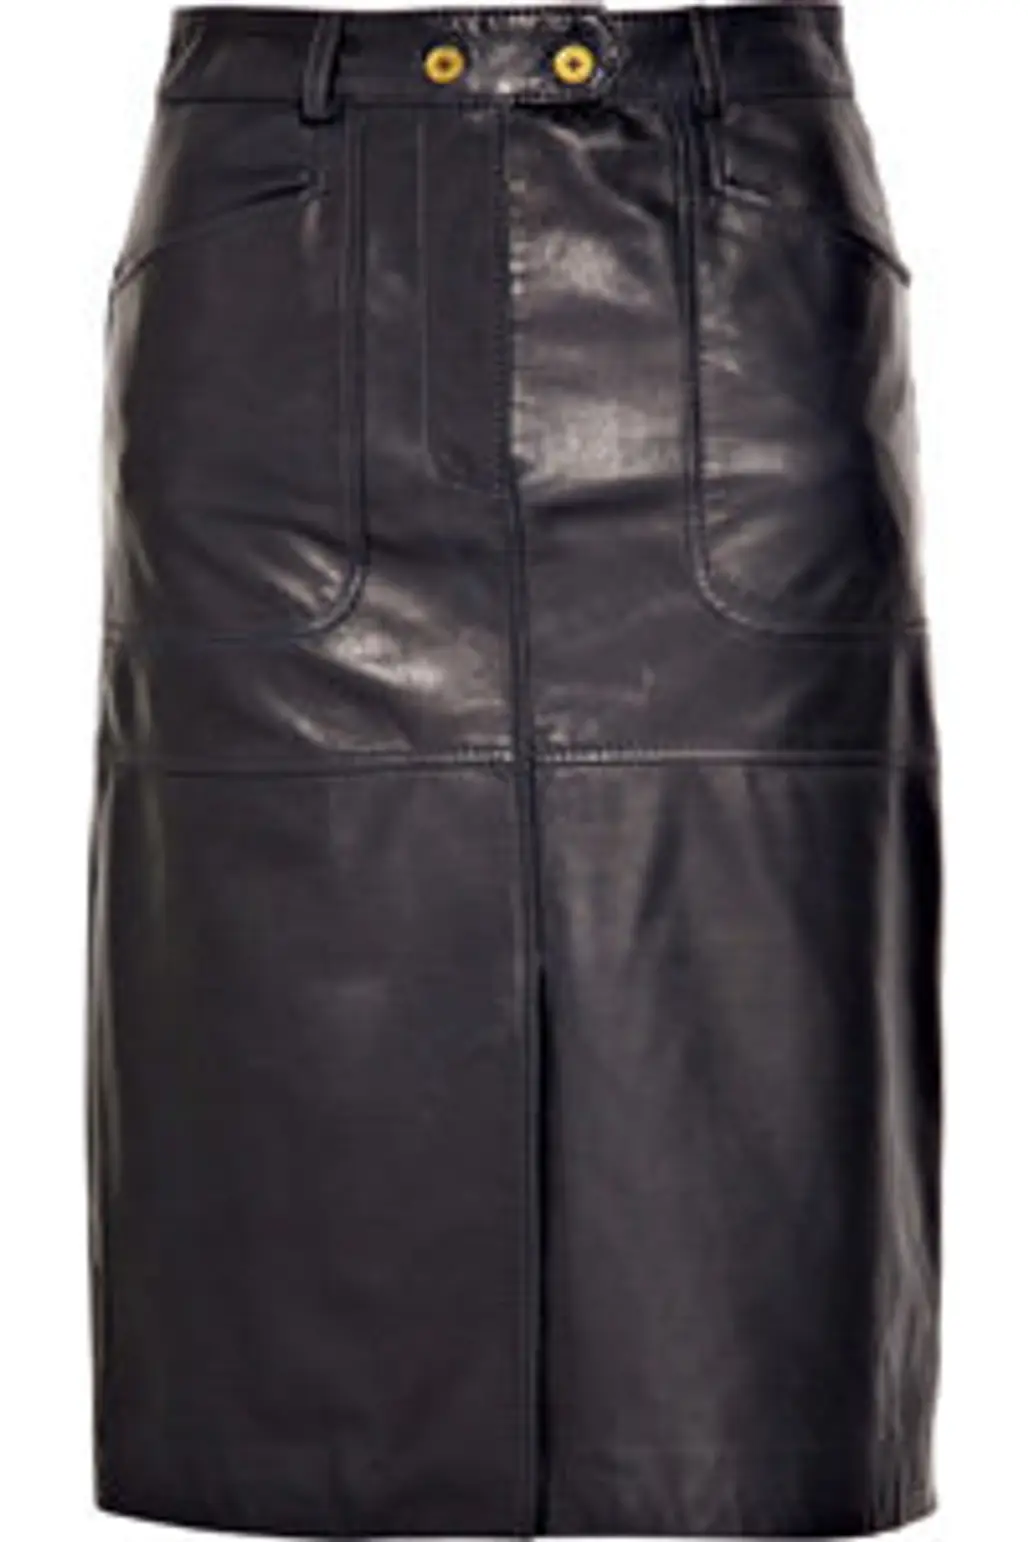 Tory Burch Julian Leather Skirt